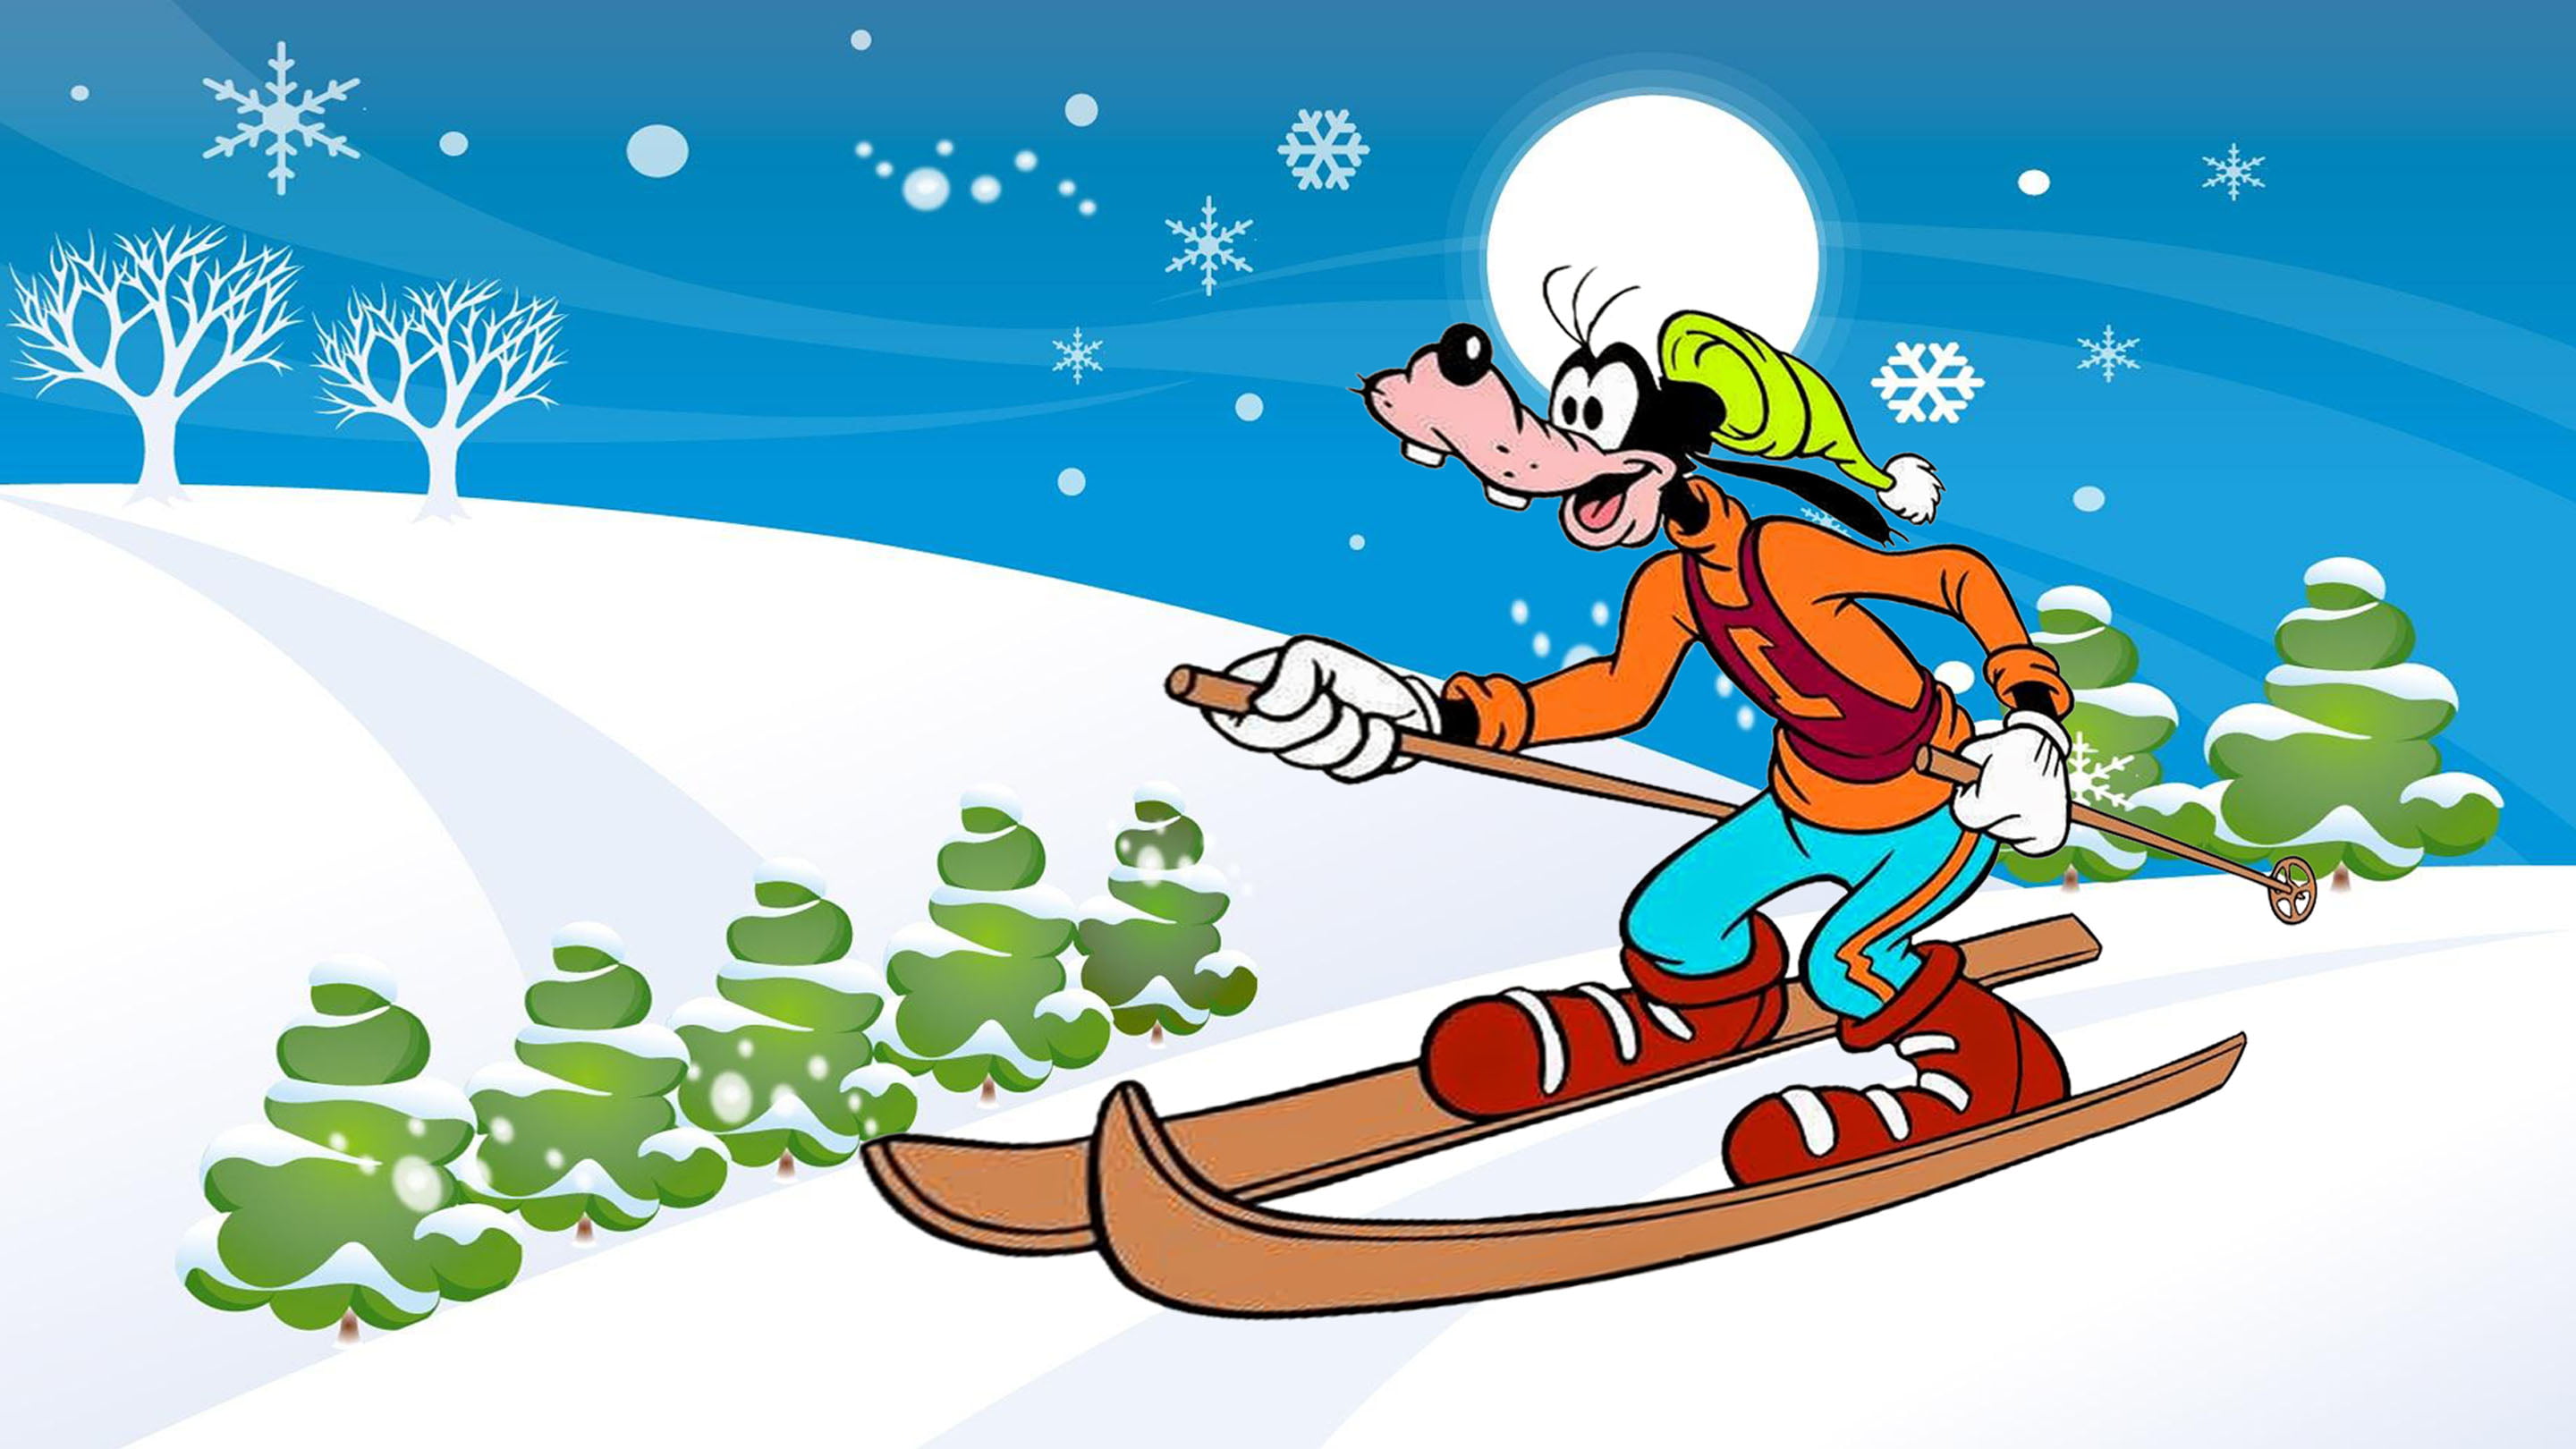 Walt Disney Cartoon Goofy Skiing Path Winter Mountain Snow Desktop Hd Wallpapers For Mobile Phones And Computer 2880×1620